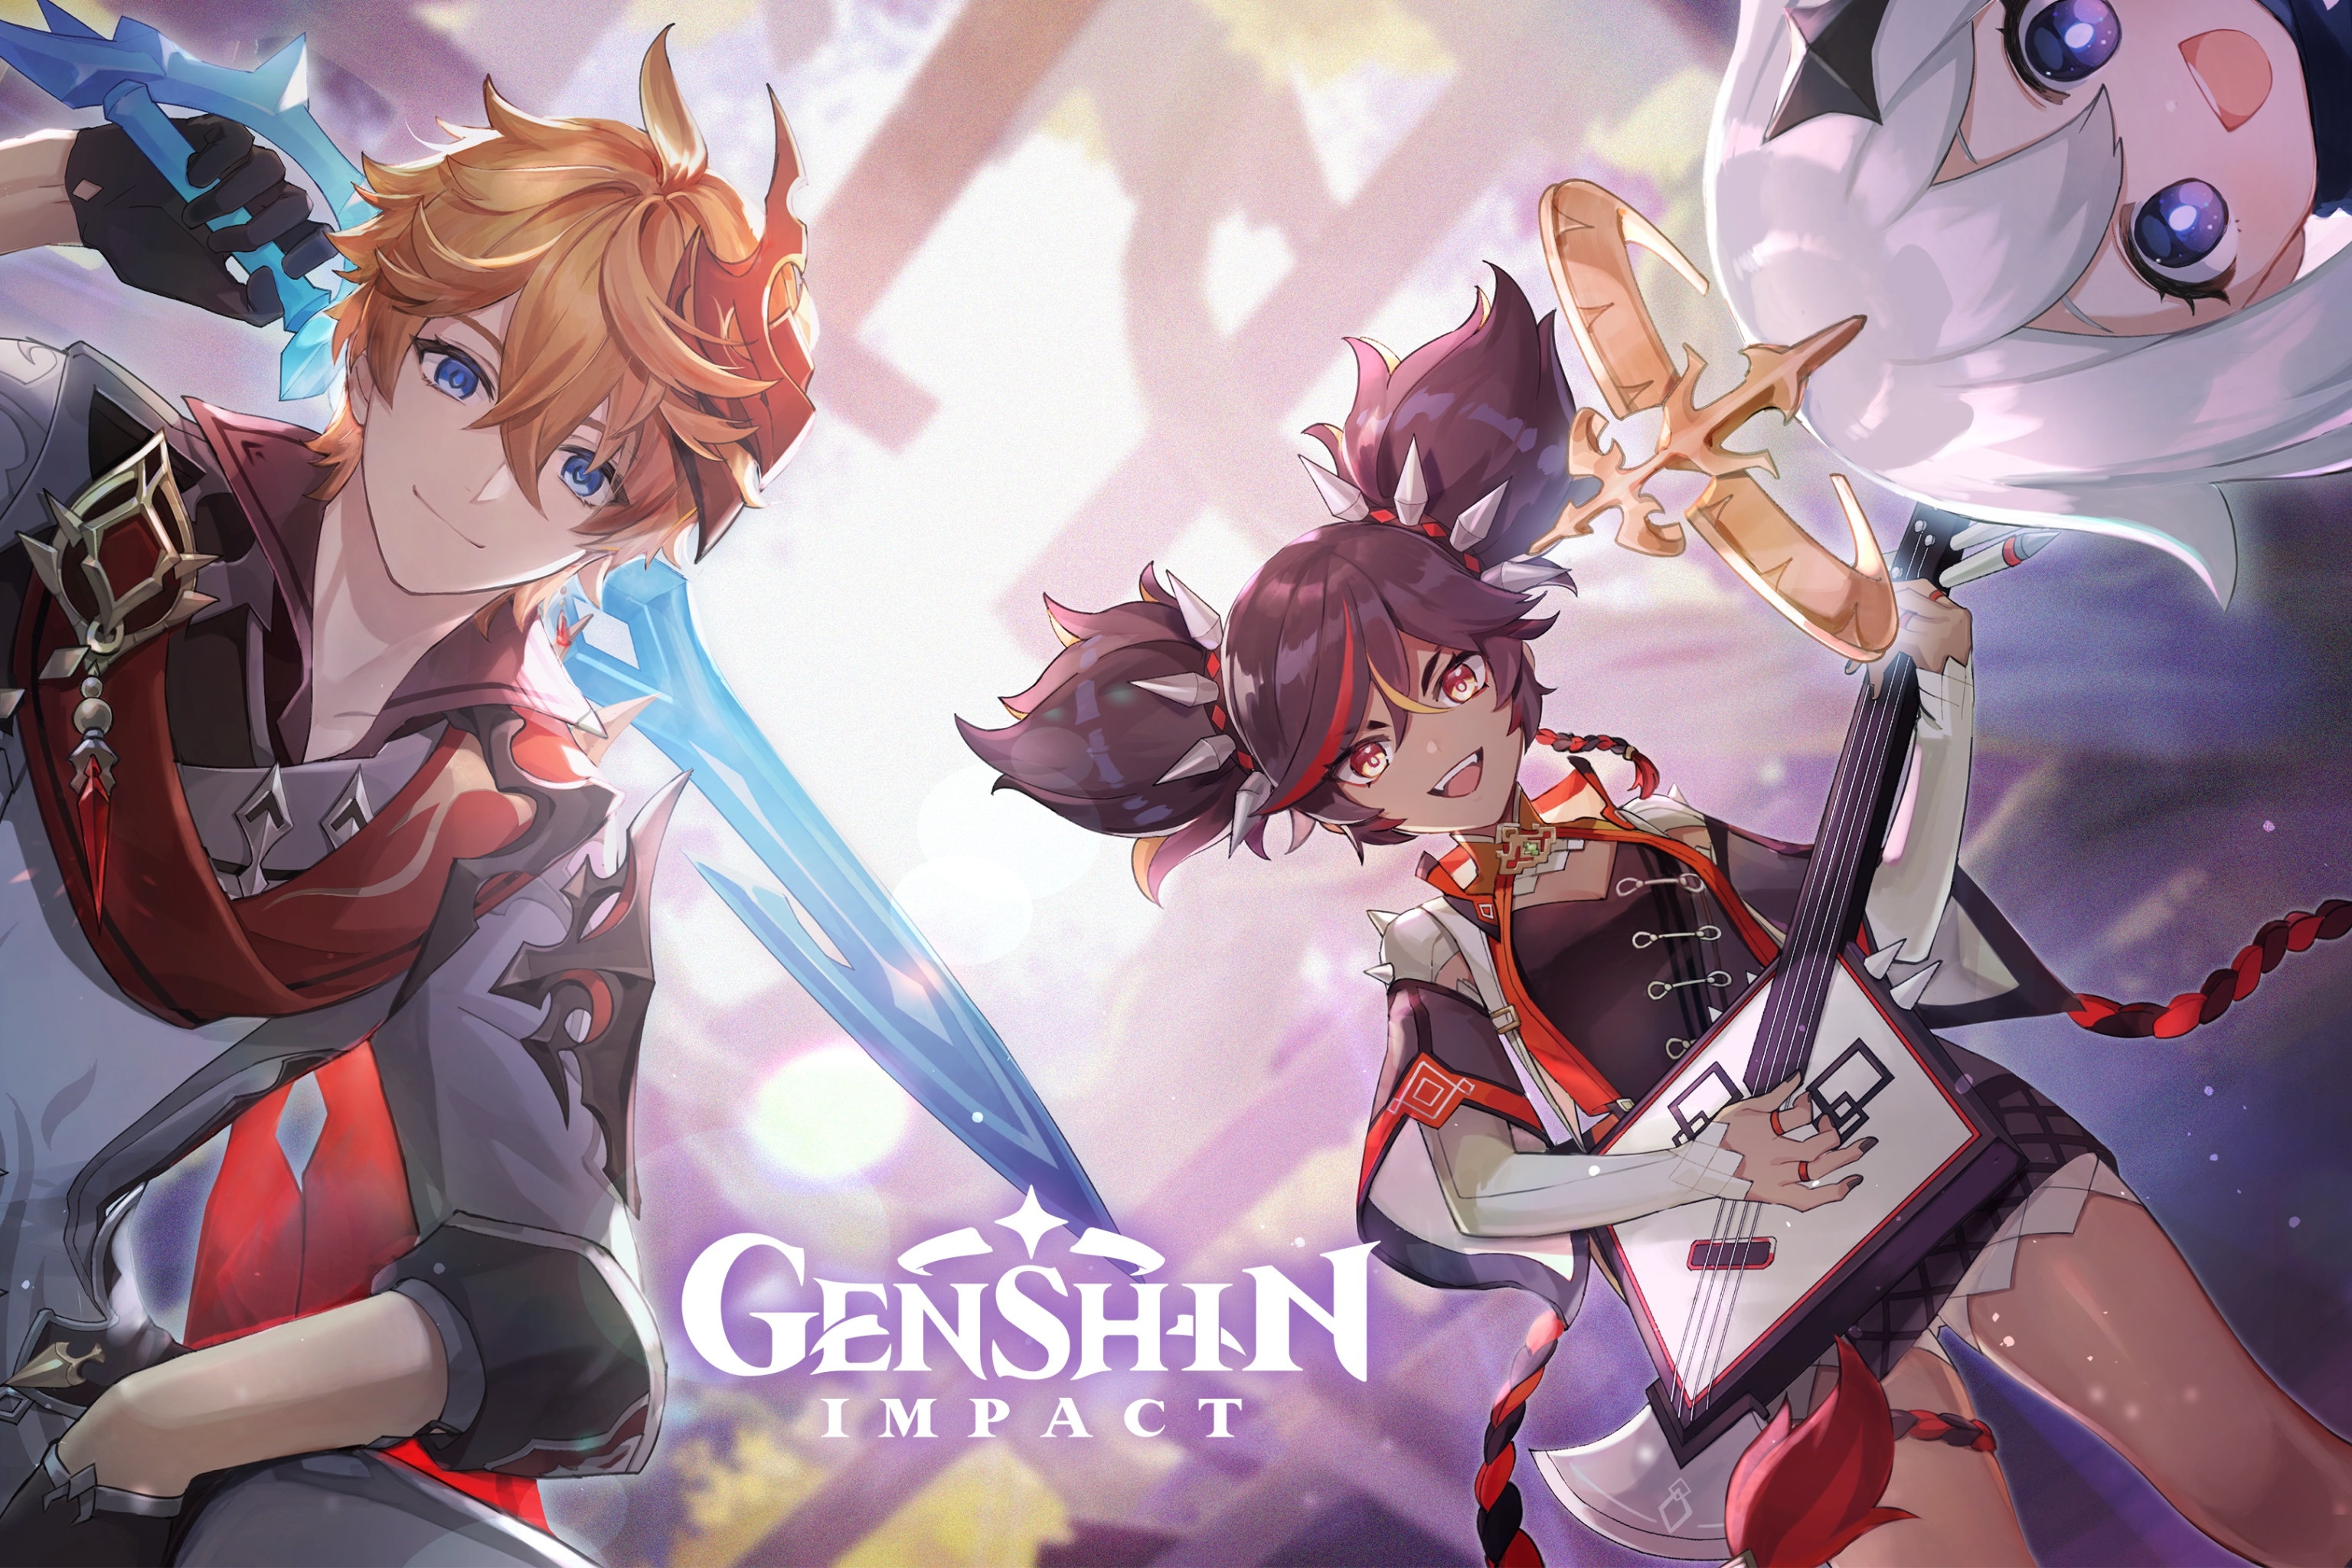 Baixe gratuitamente a imagem Videogame, Genshin Impact, Paimon (Impacto Genshin), Tartaglia Childe (Impacto Genshin), Xinyan (Impacto Genshin) na área de trabalho do seu PC